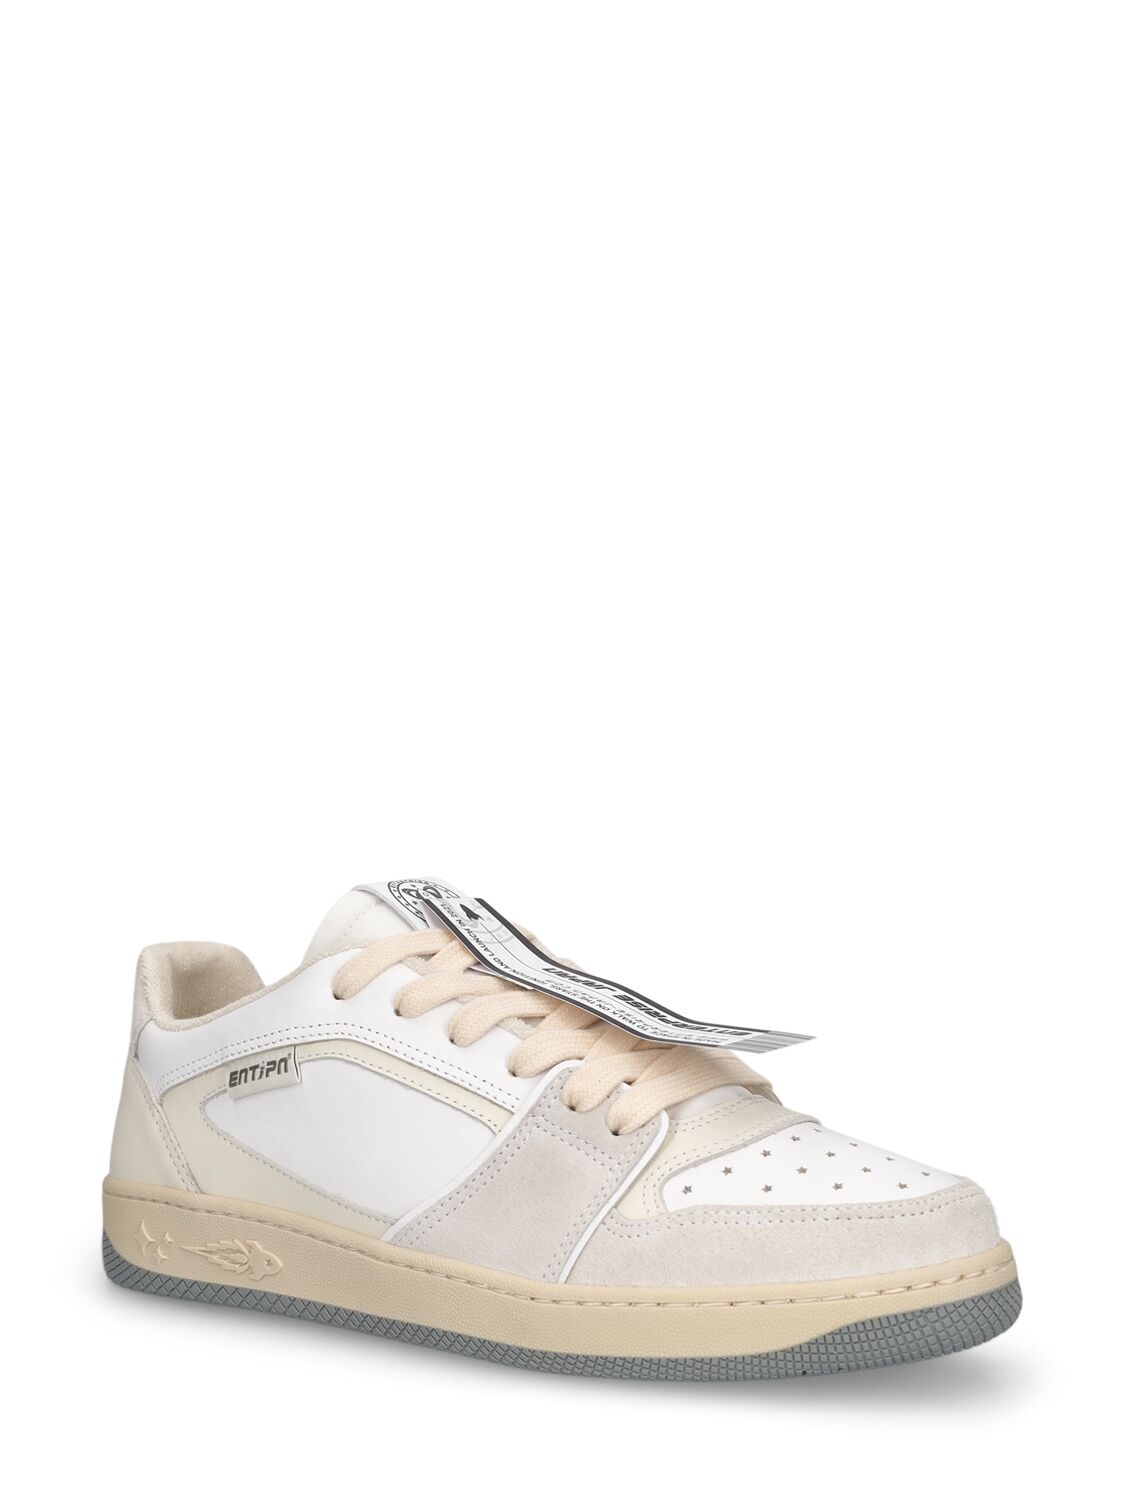 Shop Enterprise Japan Ej Egg Tag Low Leather Sneakers In Vintage White